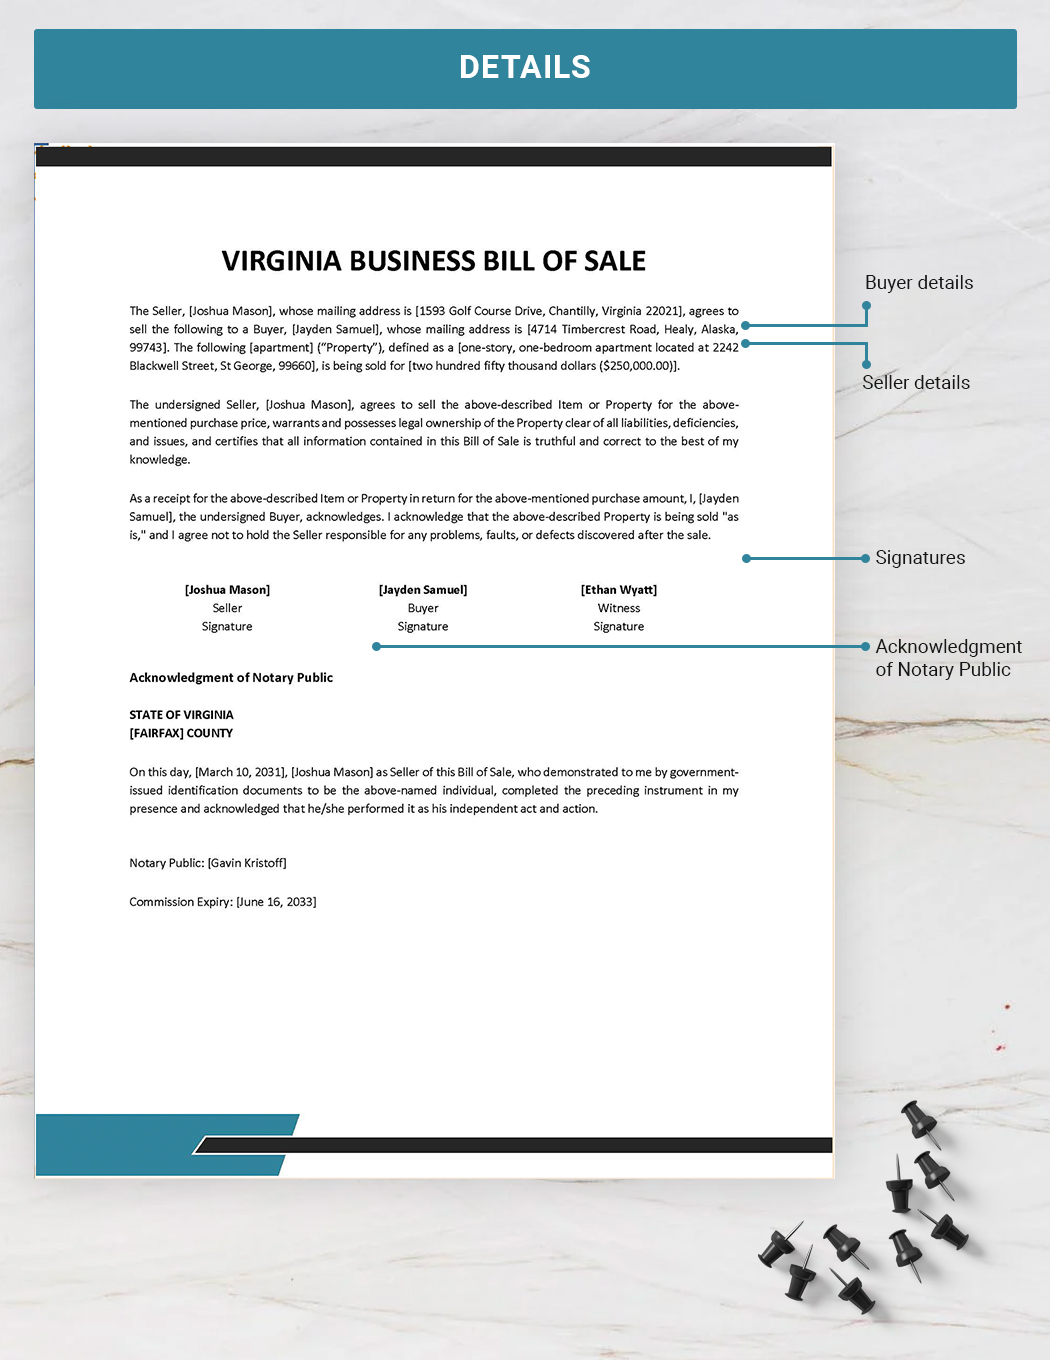 Virginia Business Bill of Sale Template